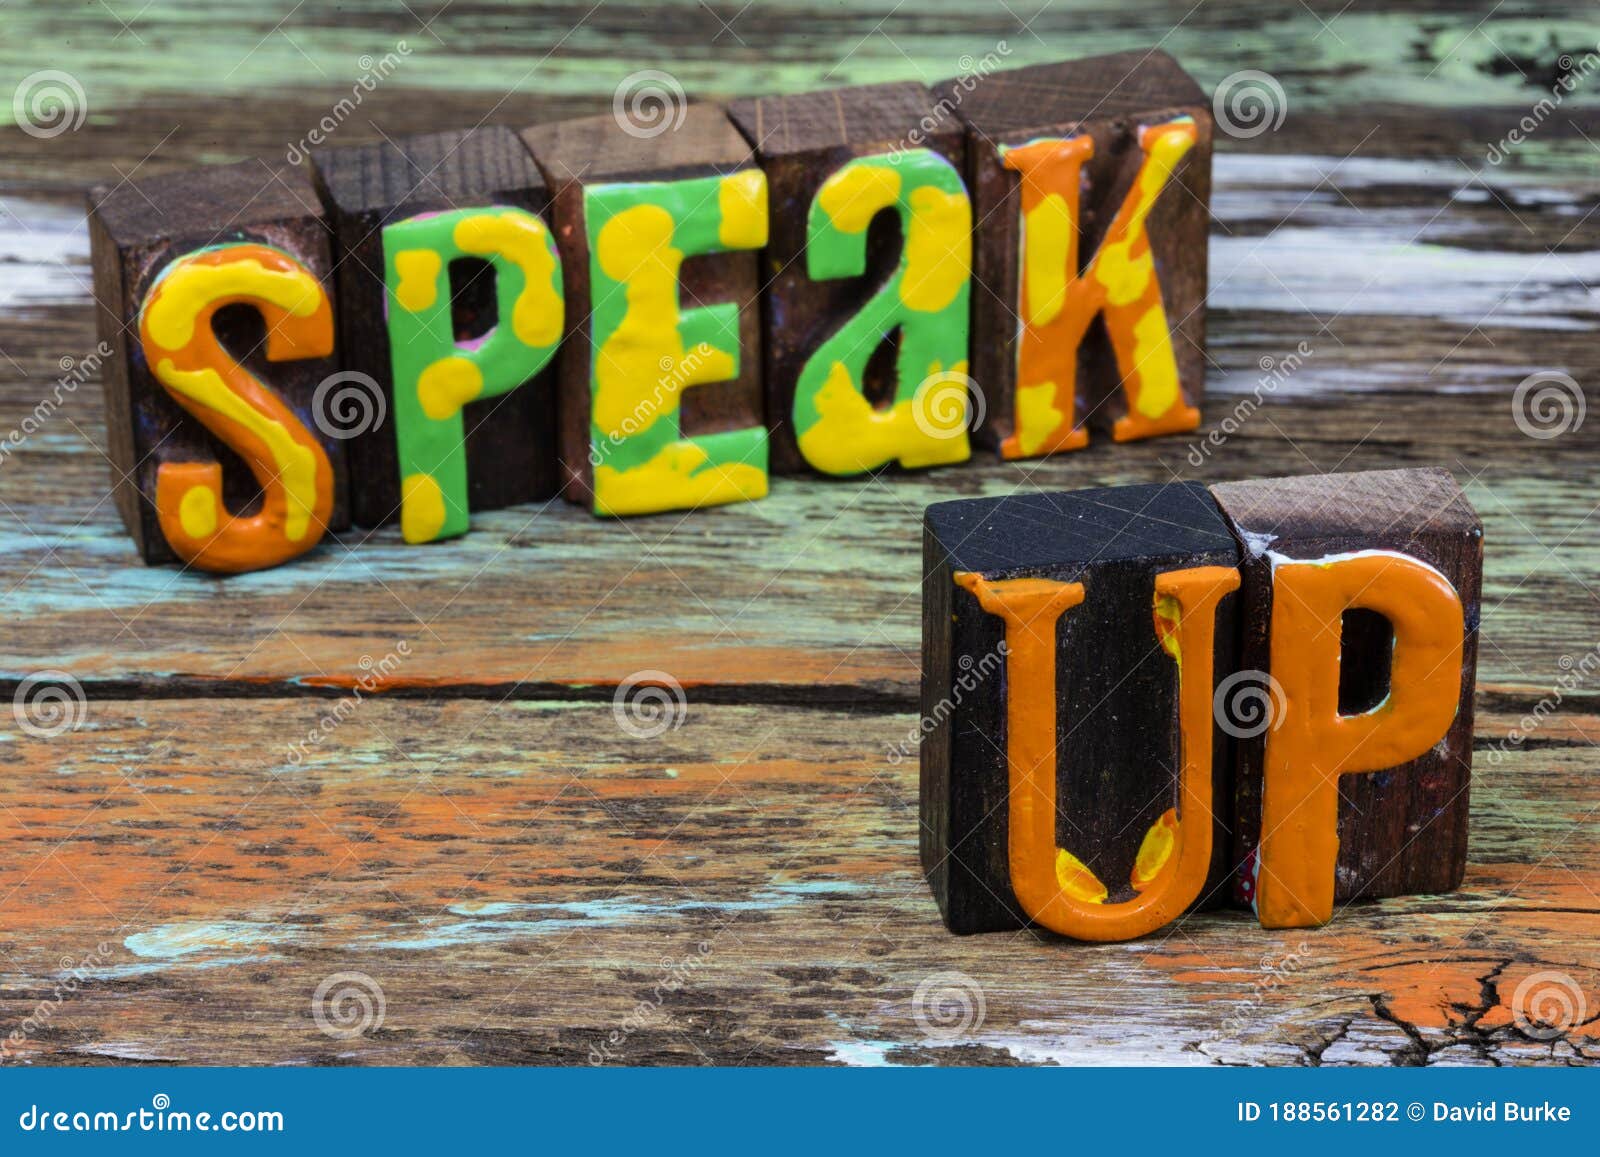 speak up opinion communication voice free speech leadership